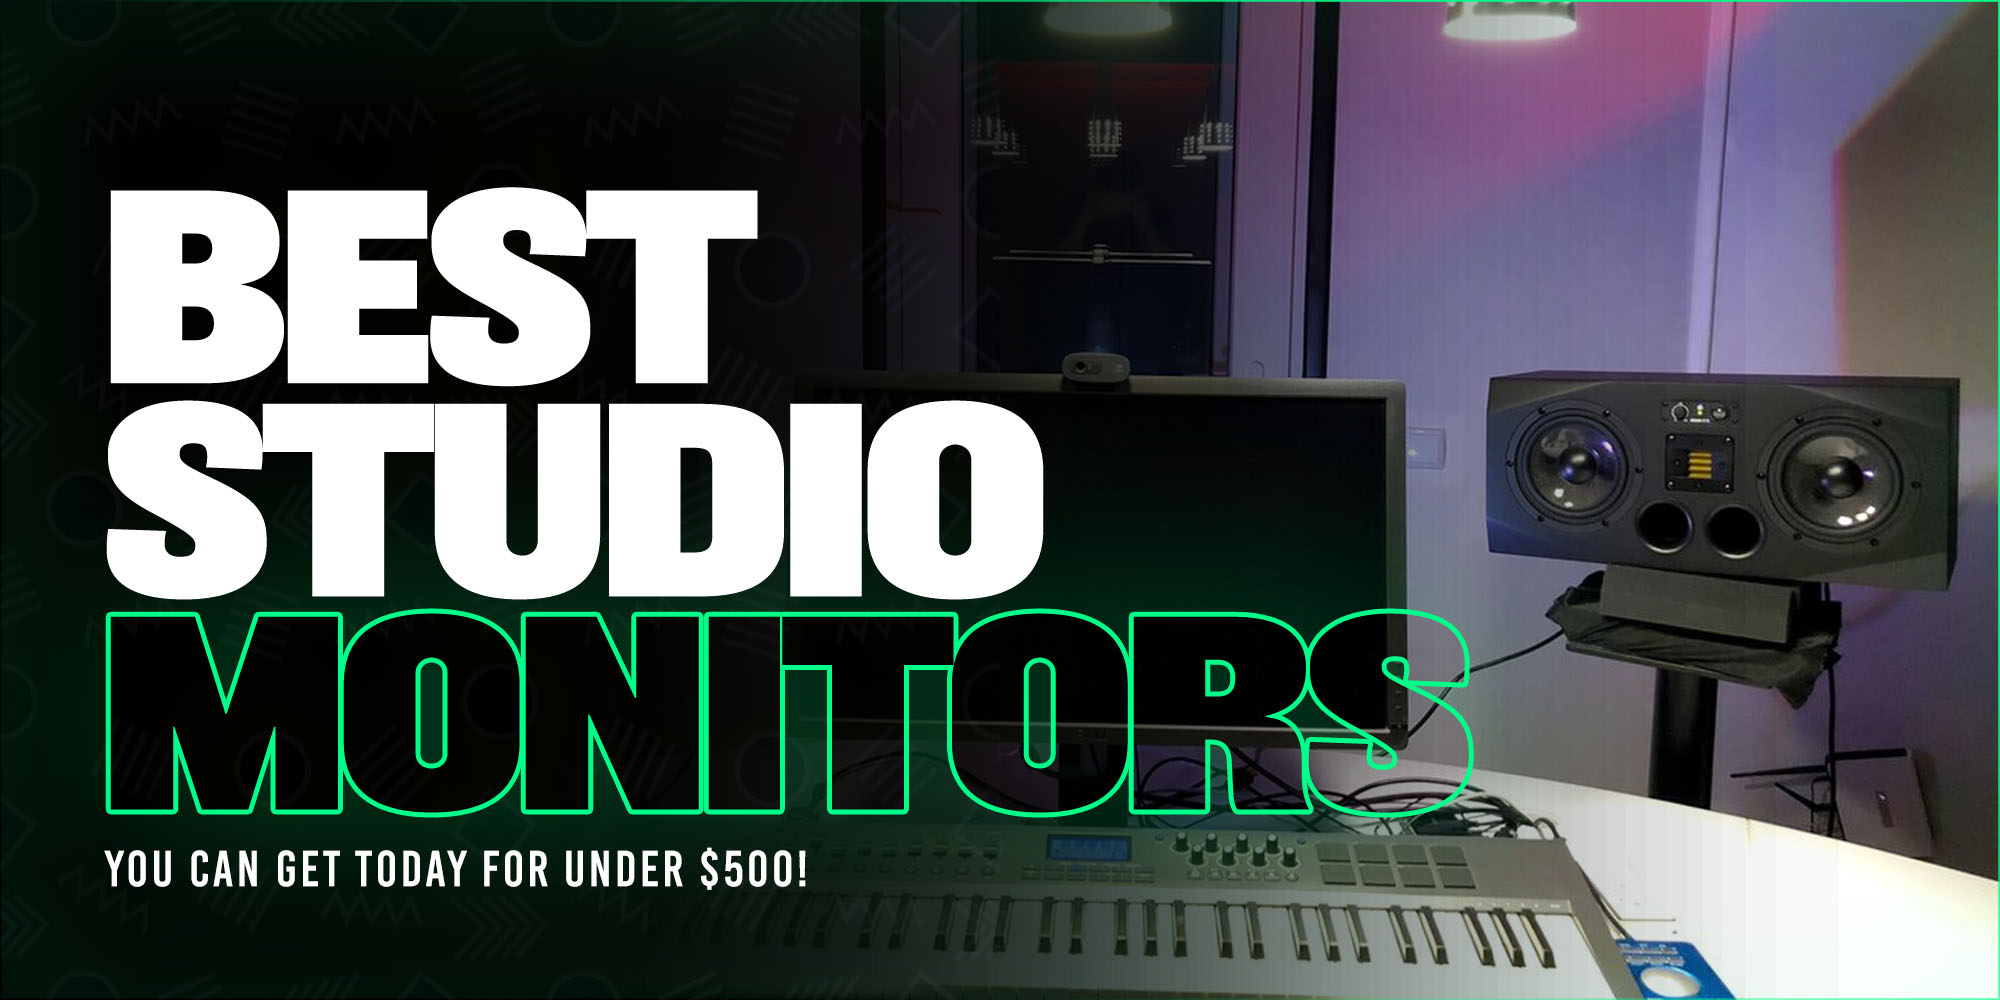 Best Studio Monitors for under 500